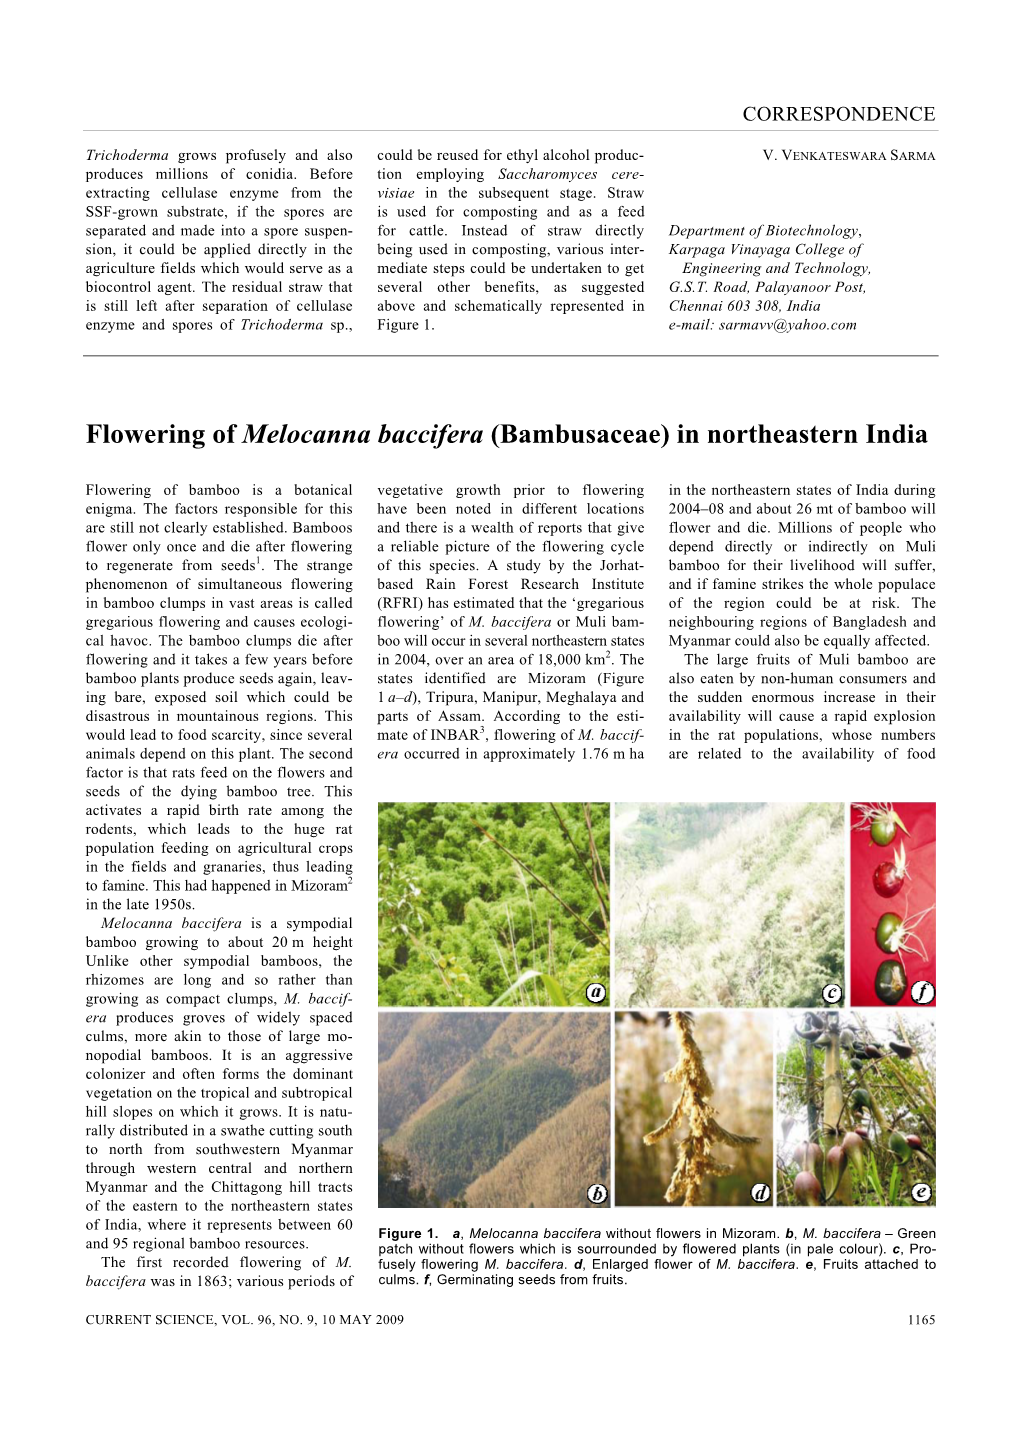 Flowering of Melocanna Baccifera (Bambusaceae) in Northeastern India